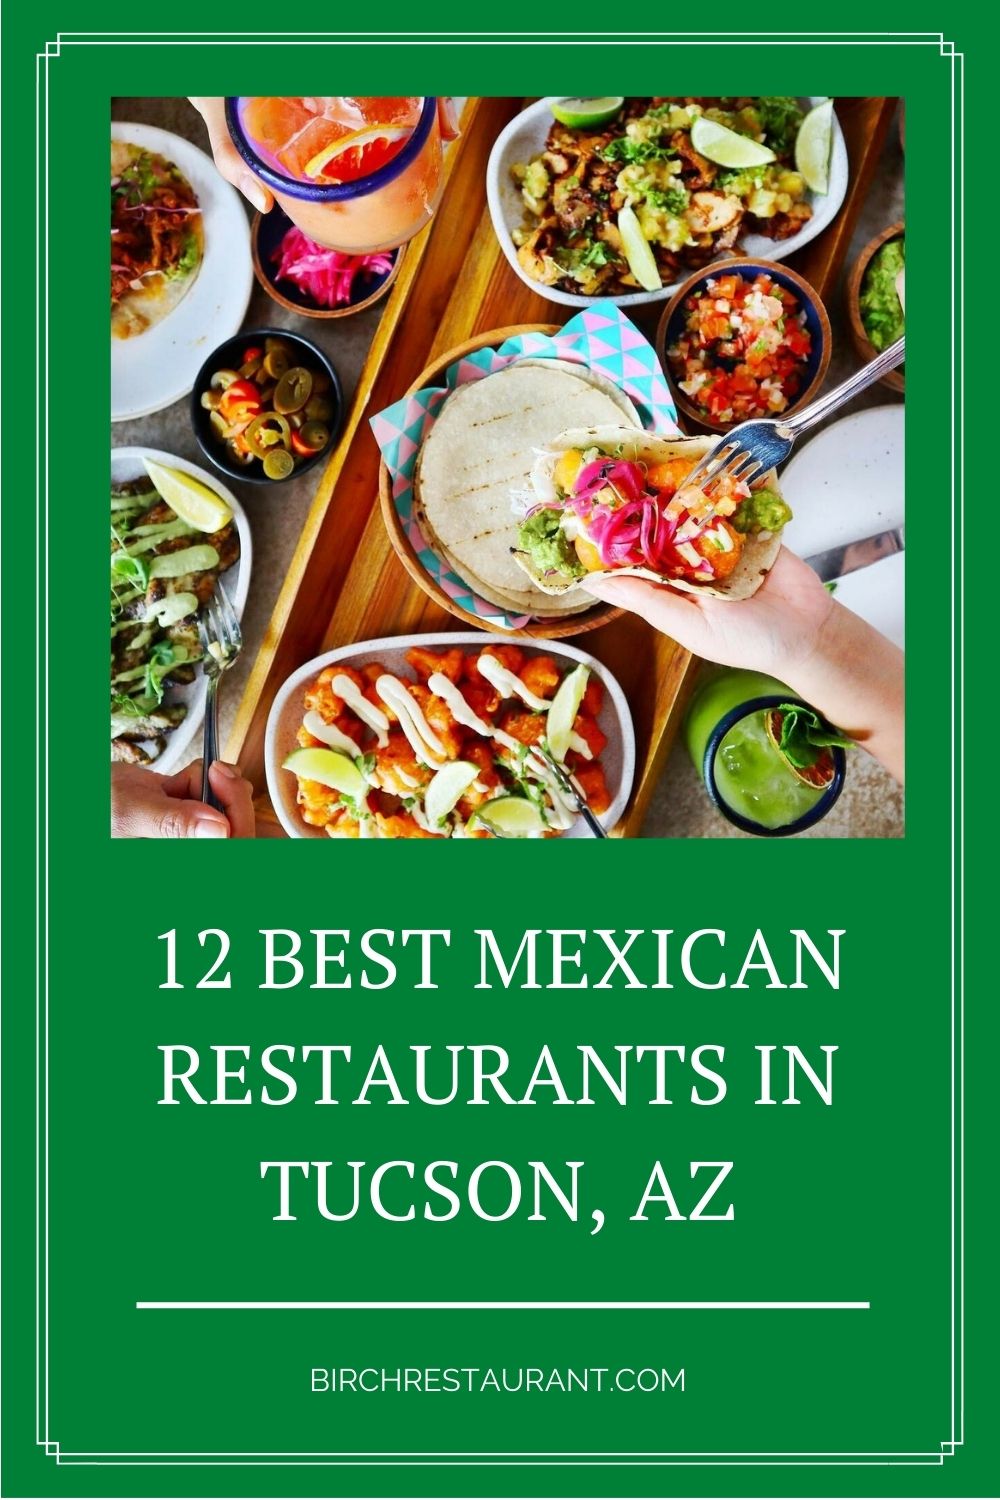 Mexican restaurants in Tucson